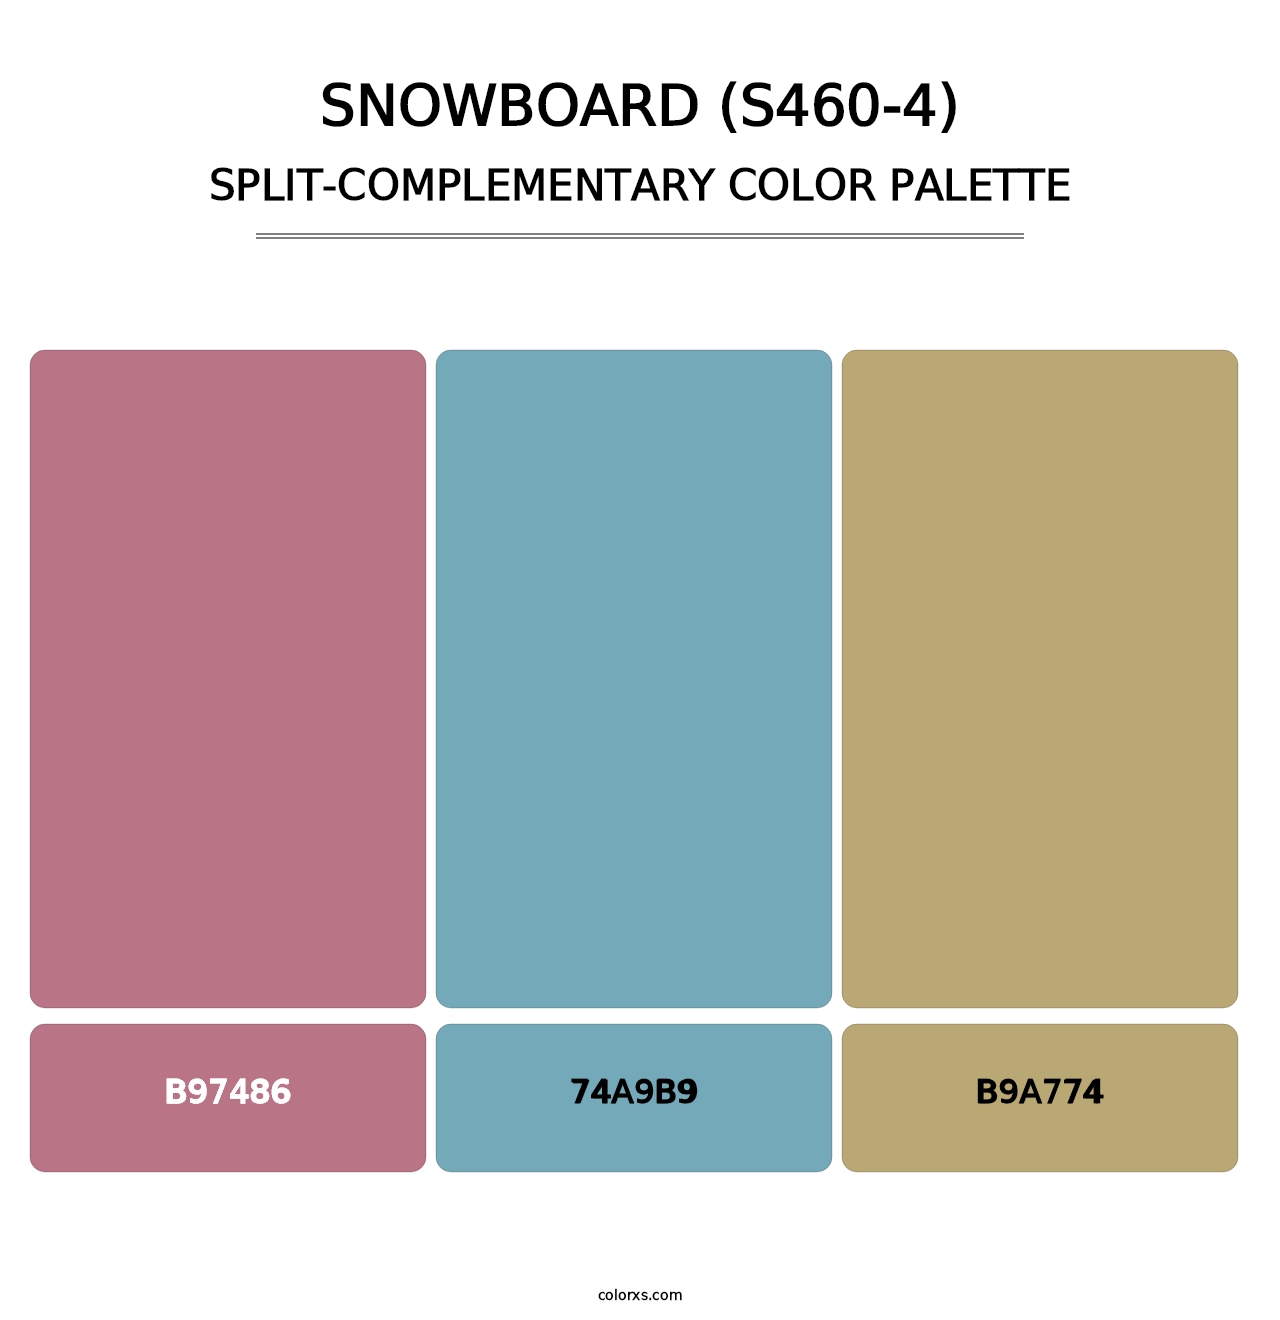 Snowboard (S460-4) - Split-Complementary Color Palette